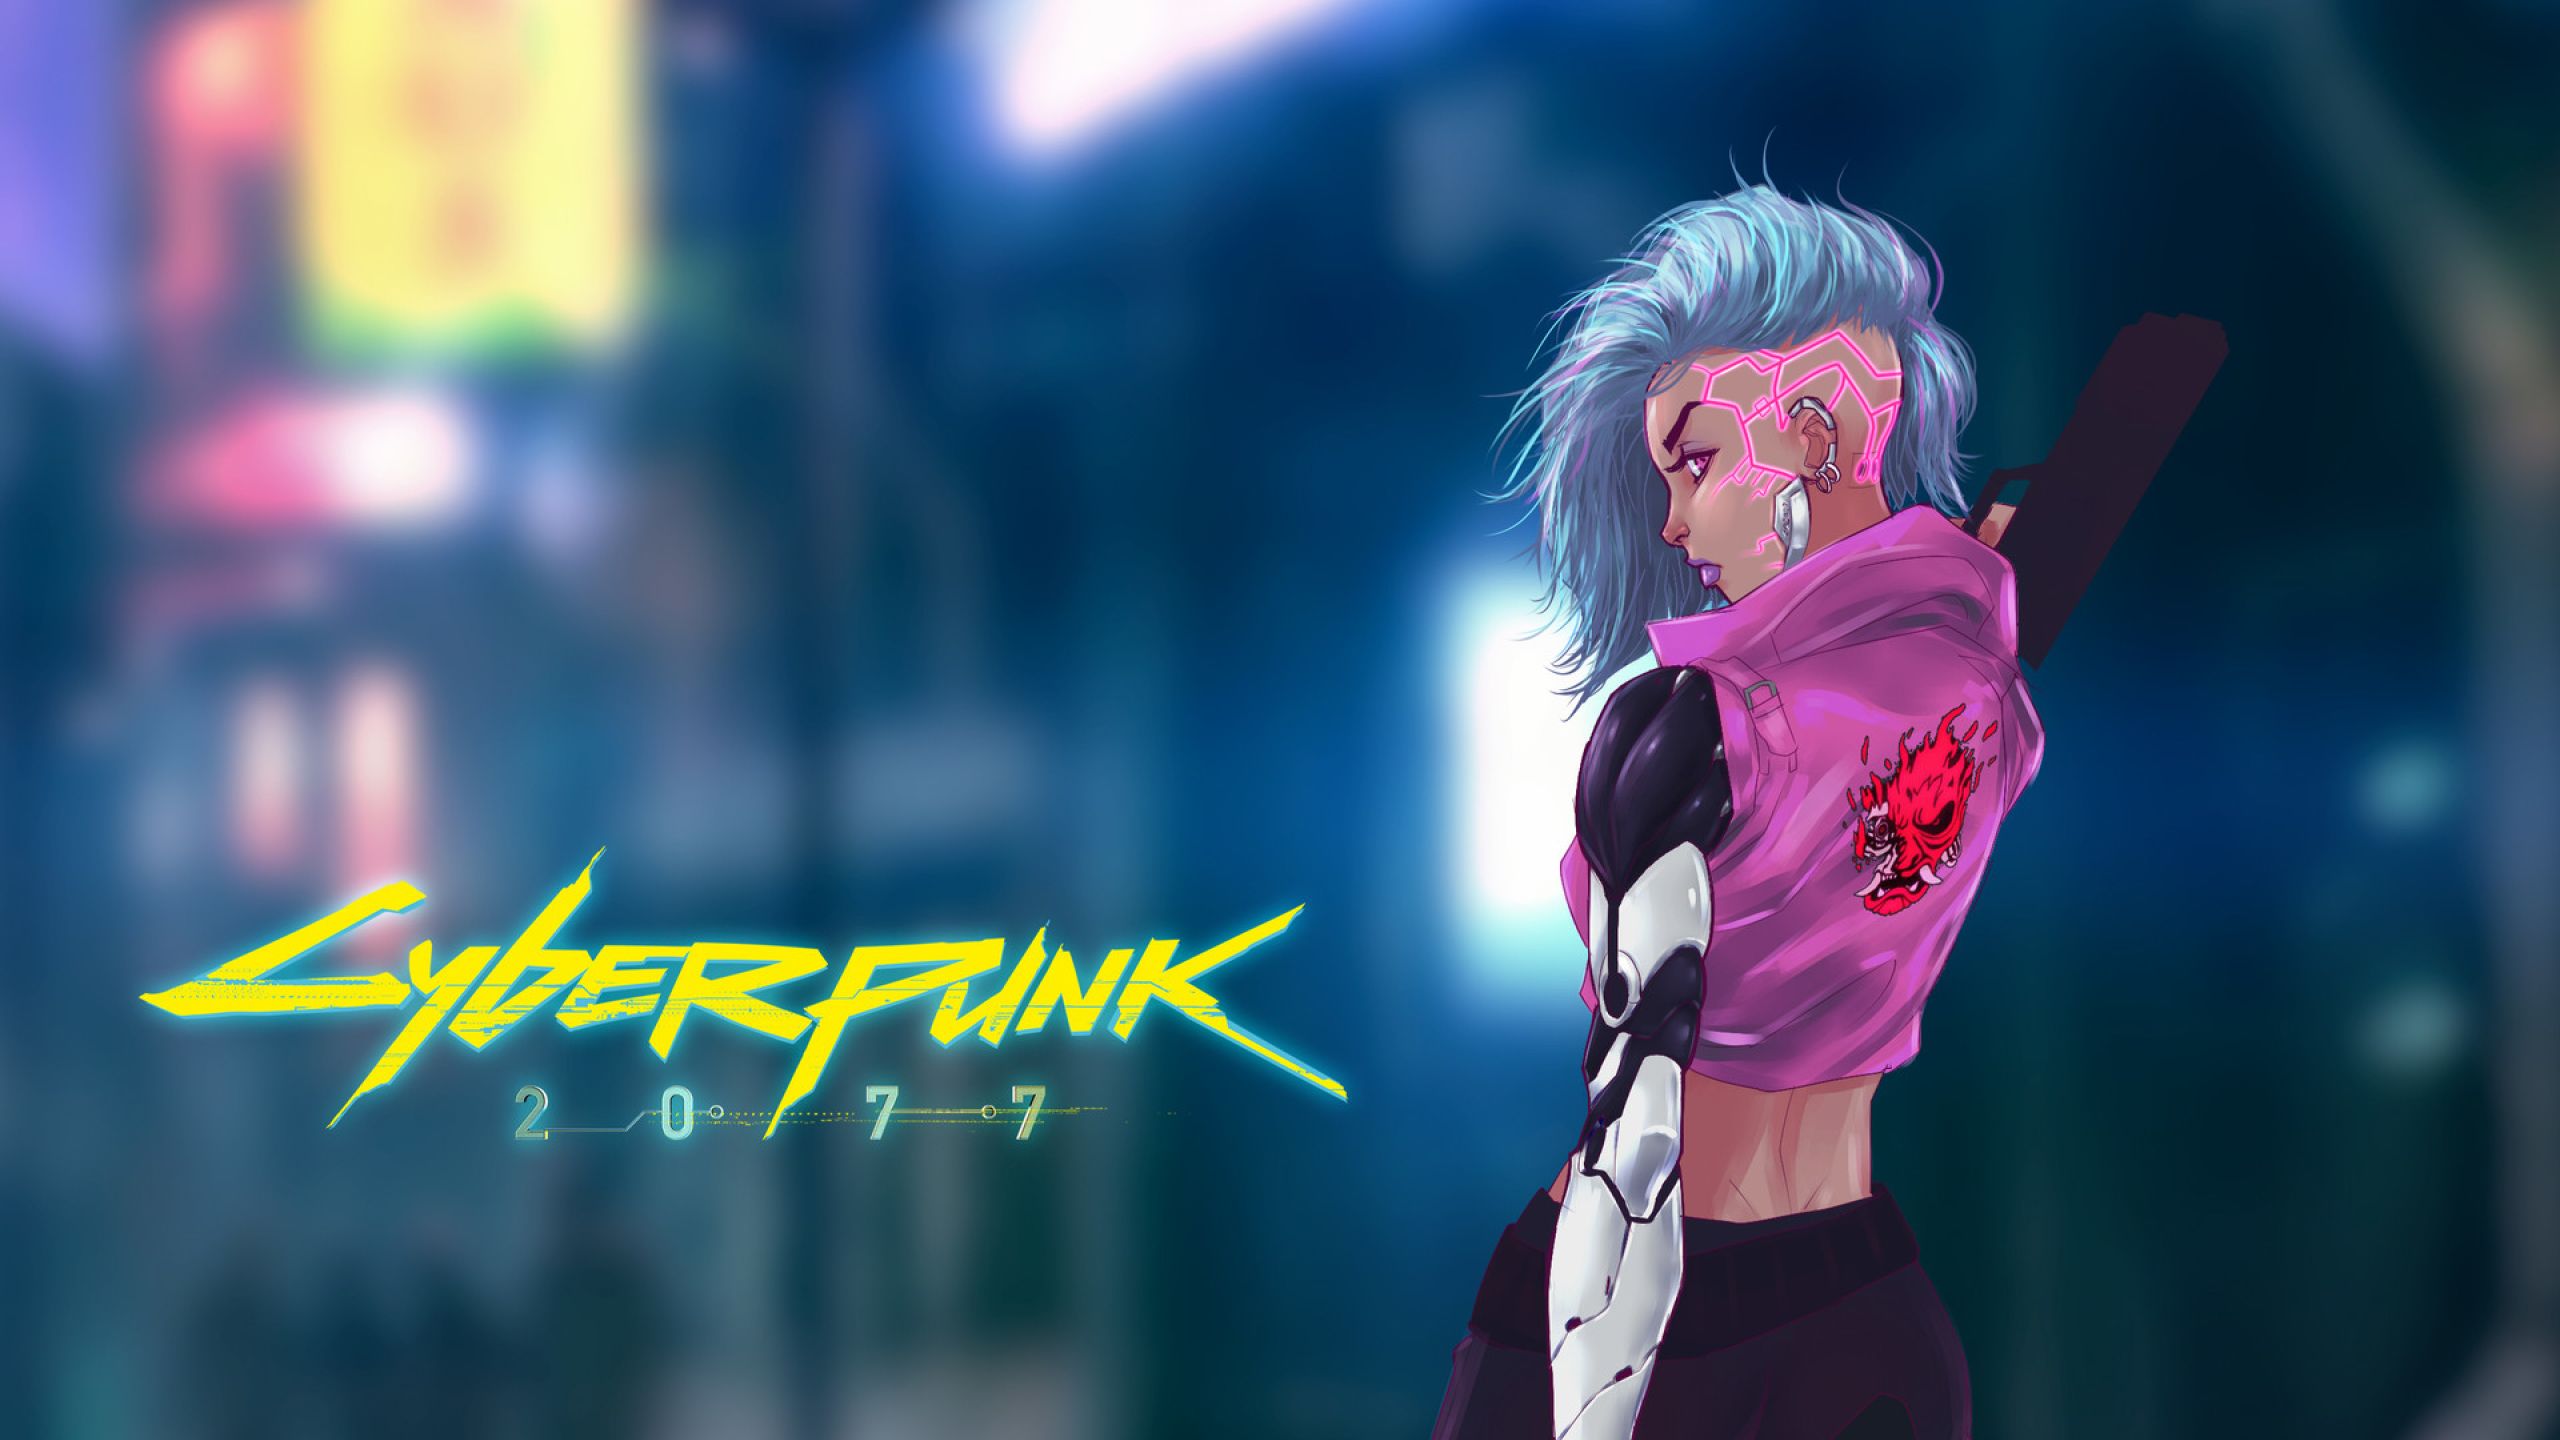 Cyberpunk 2077 Girl Art New 1440P Resolution Wallpaper, HD Games 4K Wallpaper, Image, Photo and Background